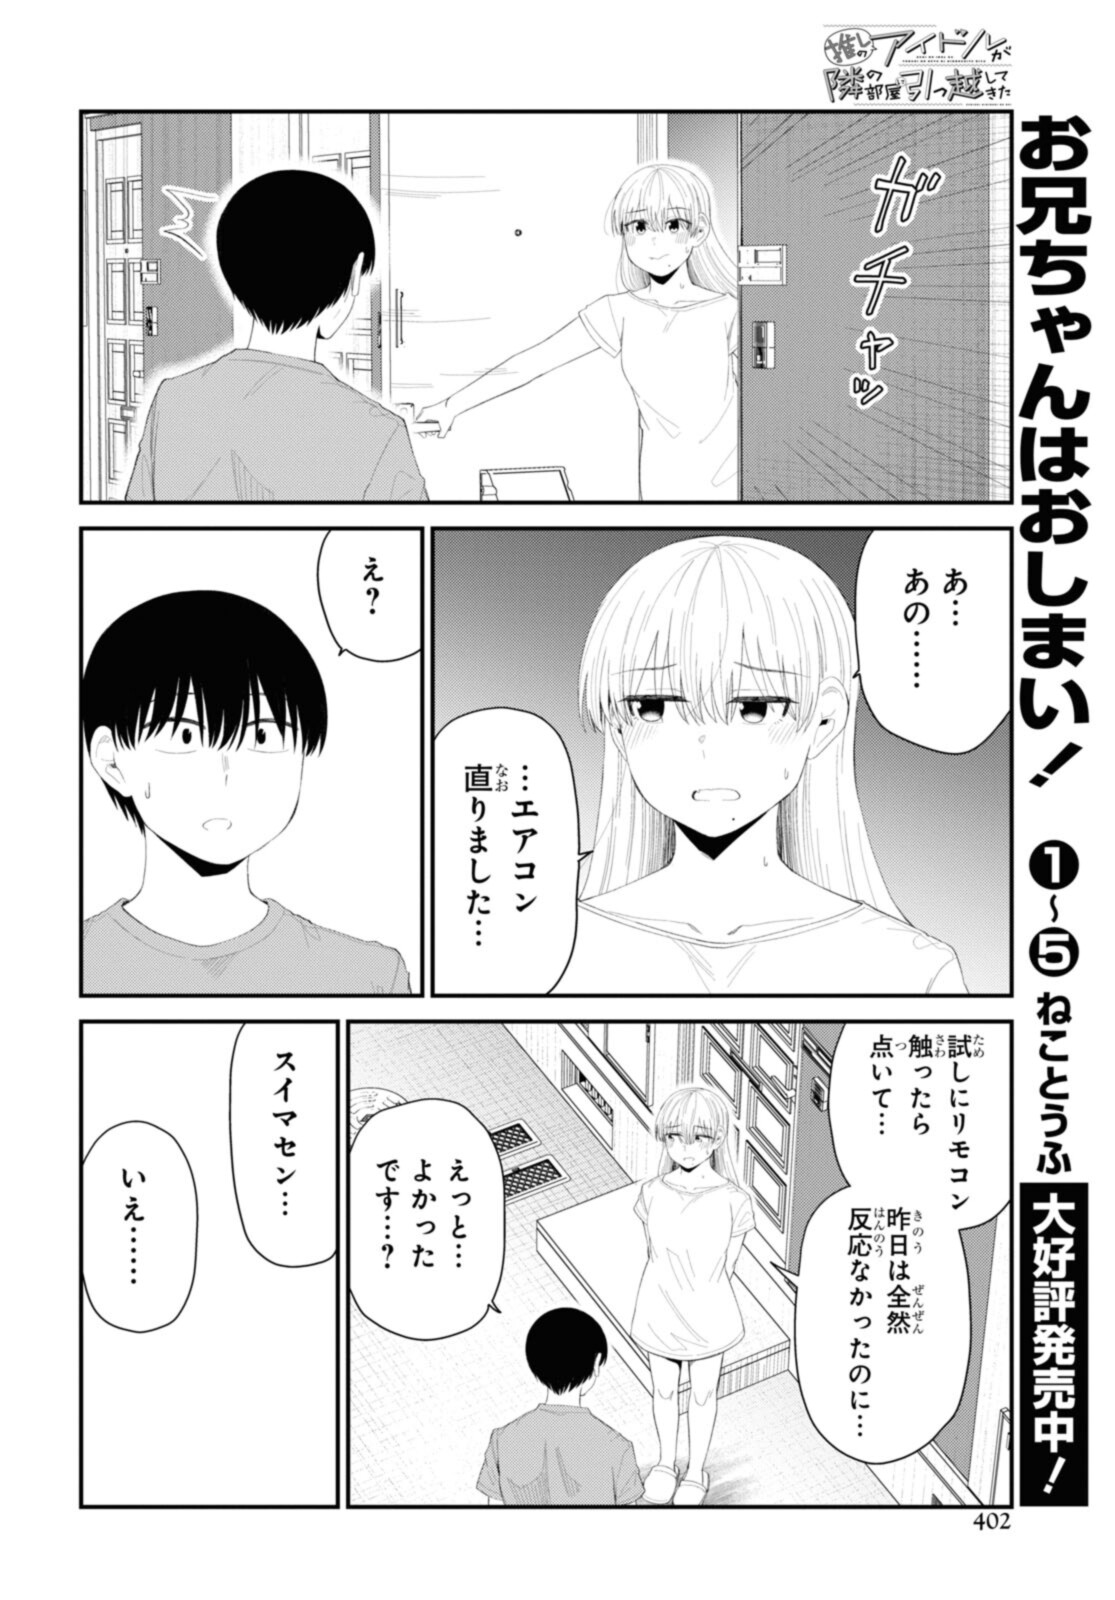 The Romcom Tonari no Idol-san 推しのアイドルが隣の部屋に引っ越してきた 第40.2話 - Page 4